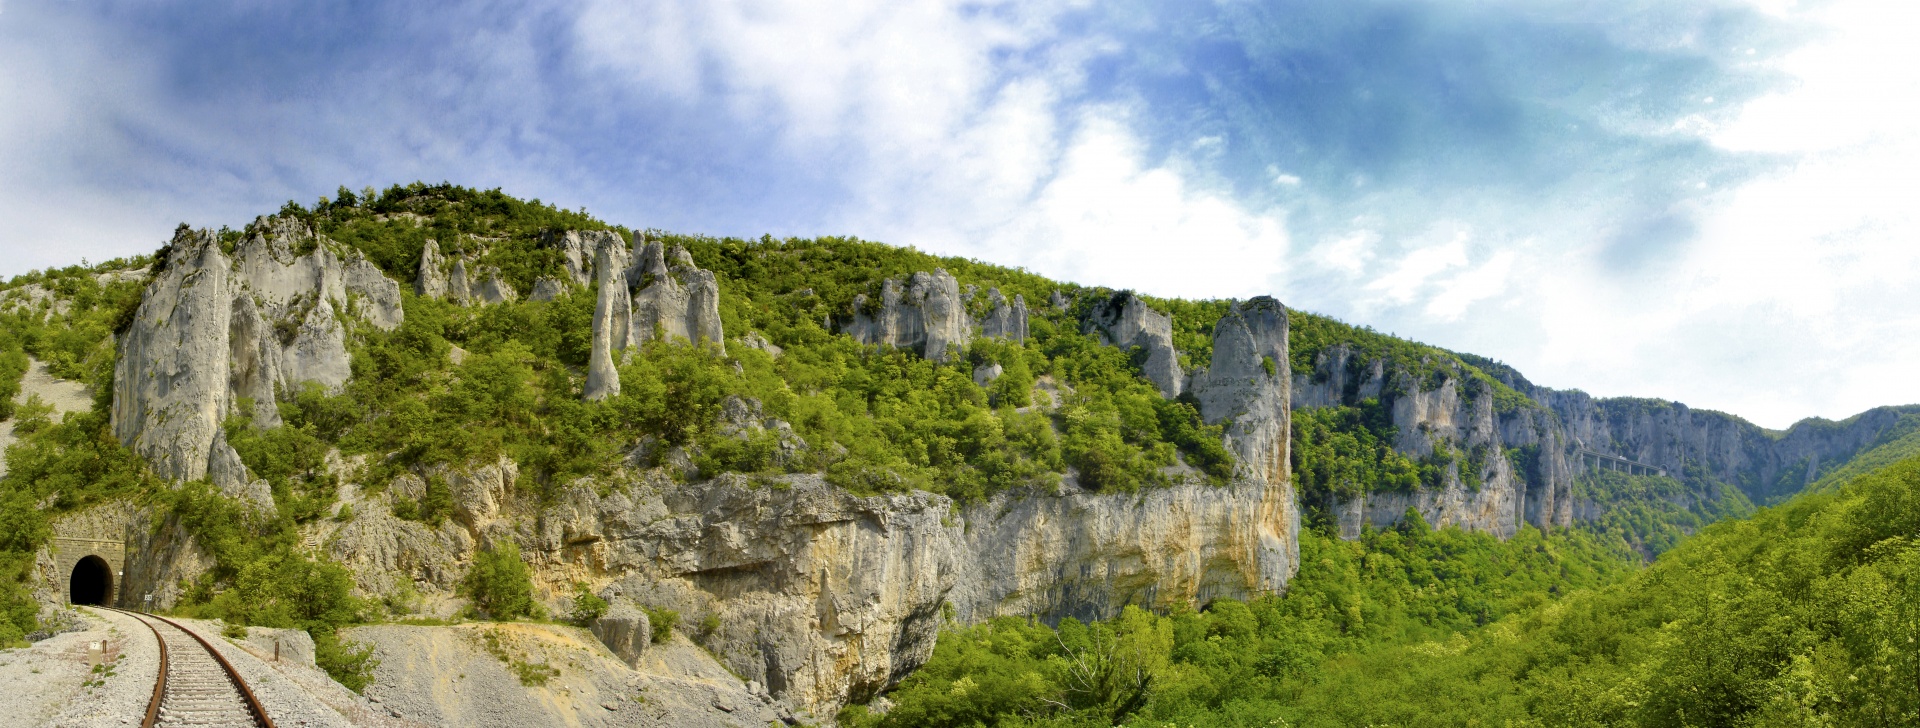 Valley near Rijeka - Croatia on west side of mountain Učka, free climbing paradise, nature park